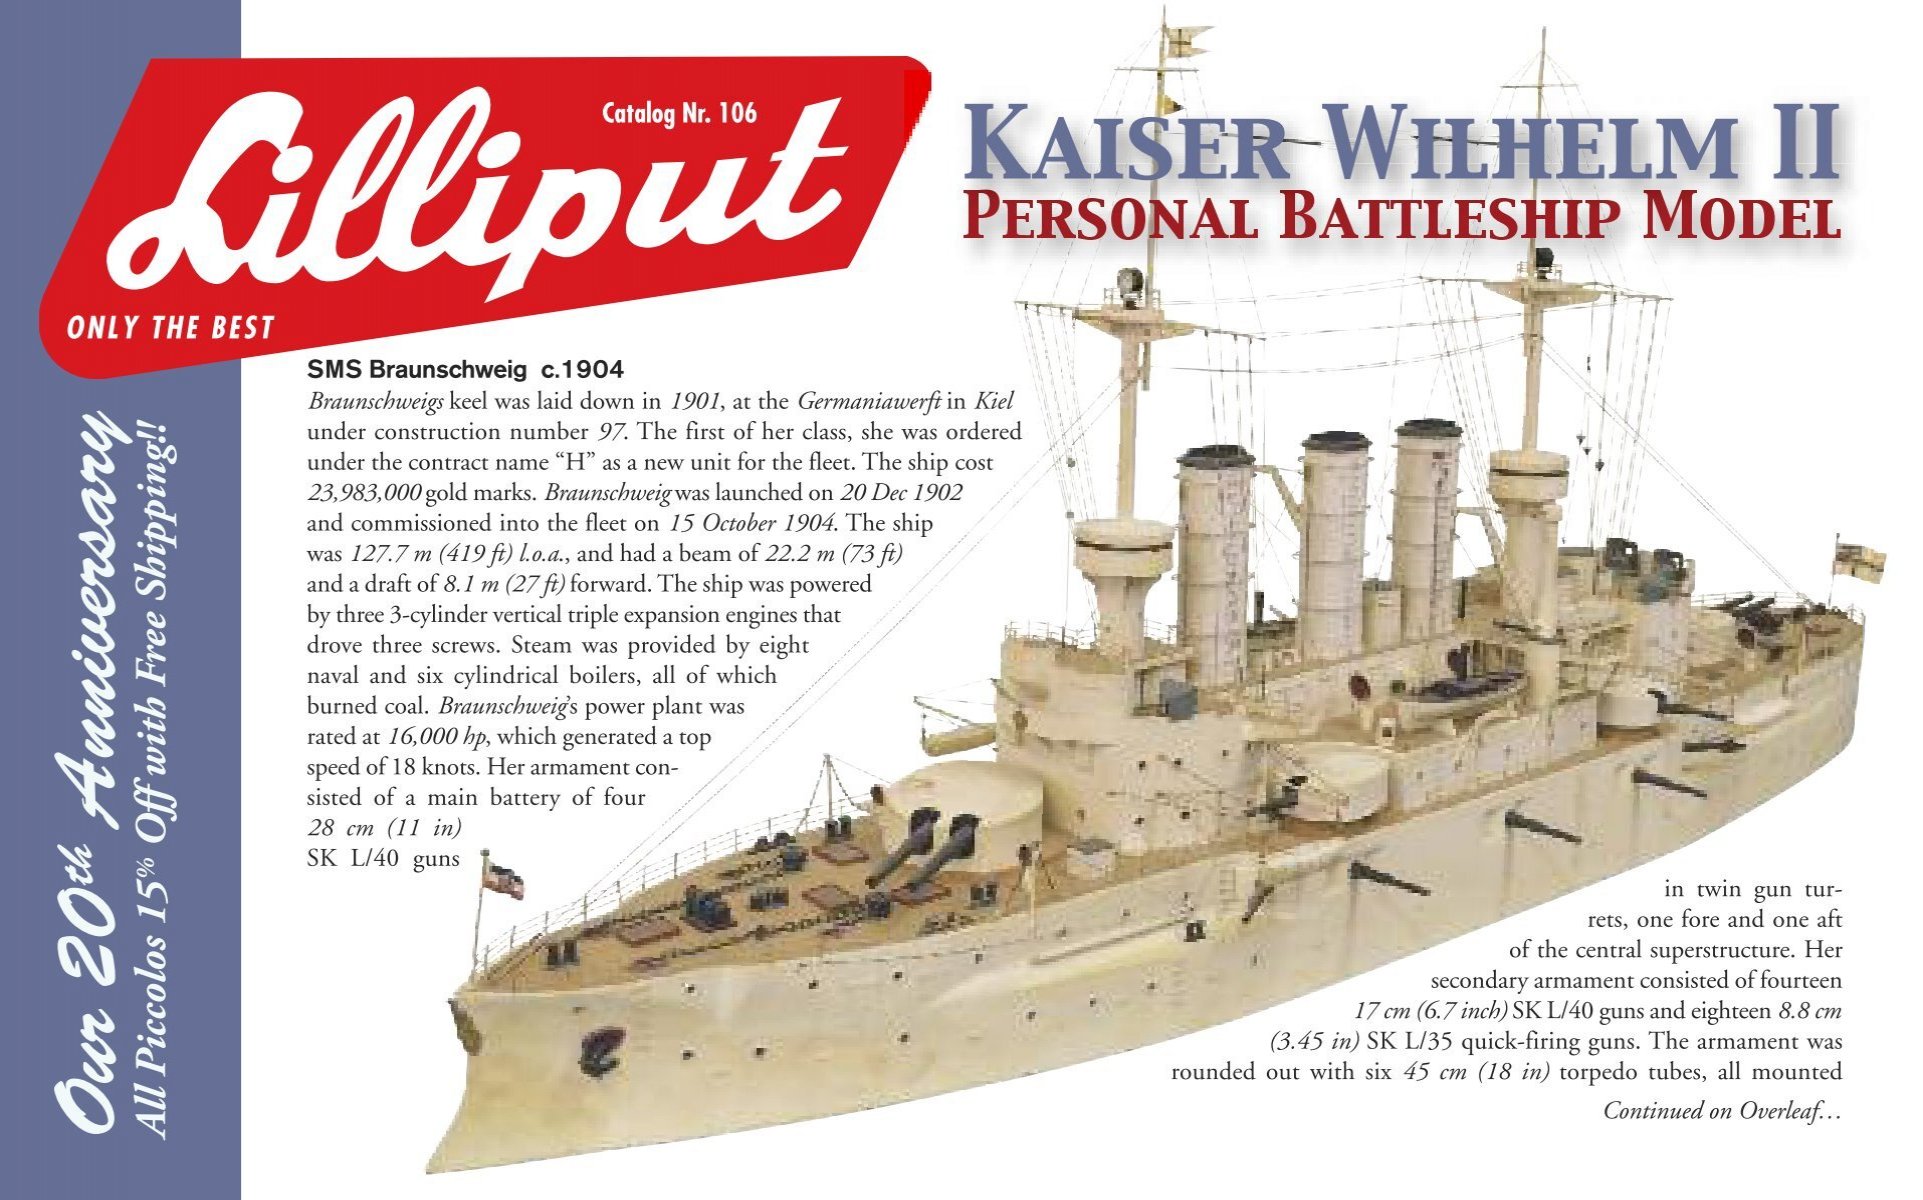 Kaiser Wilhelm II - Motor Lilliput Company